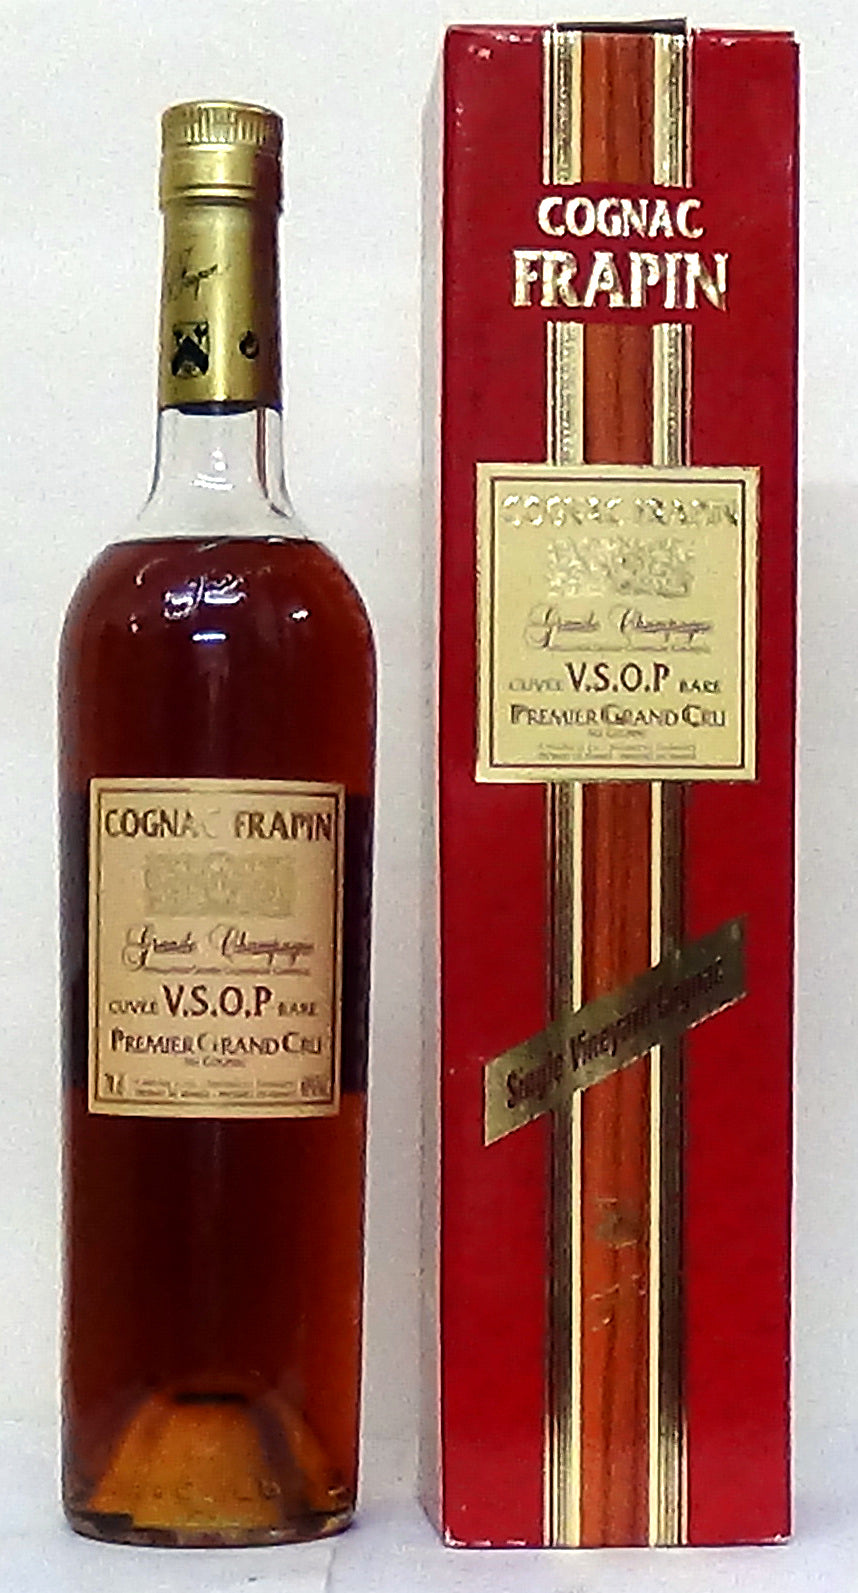 Frapin Cognac Cuvee VSOP Rare Premier Grand Cru - French Cognac - Cogn